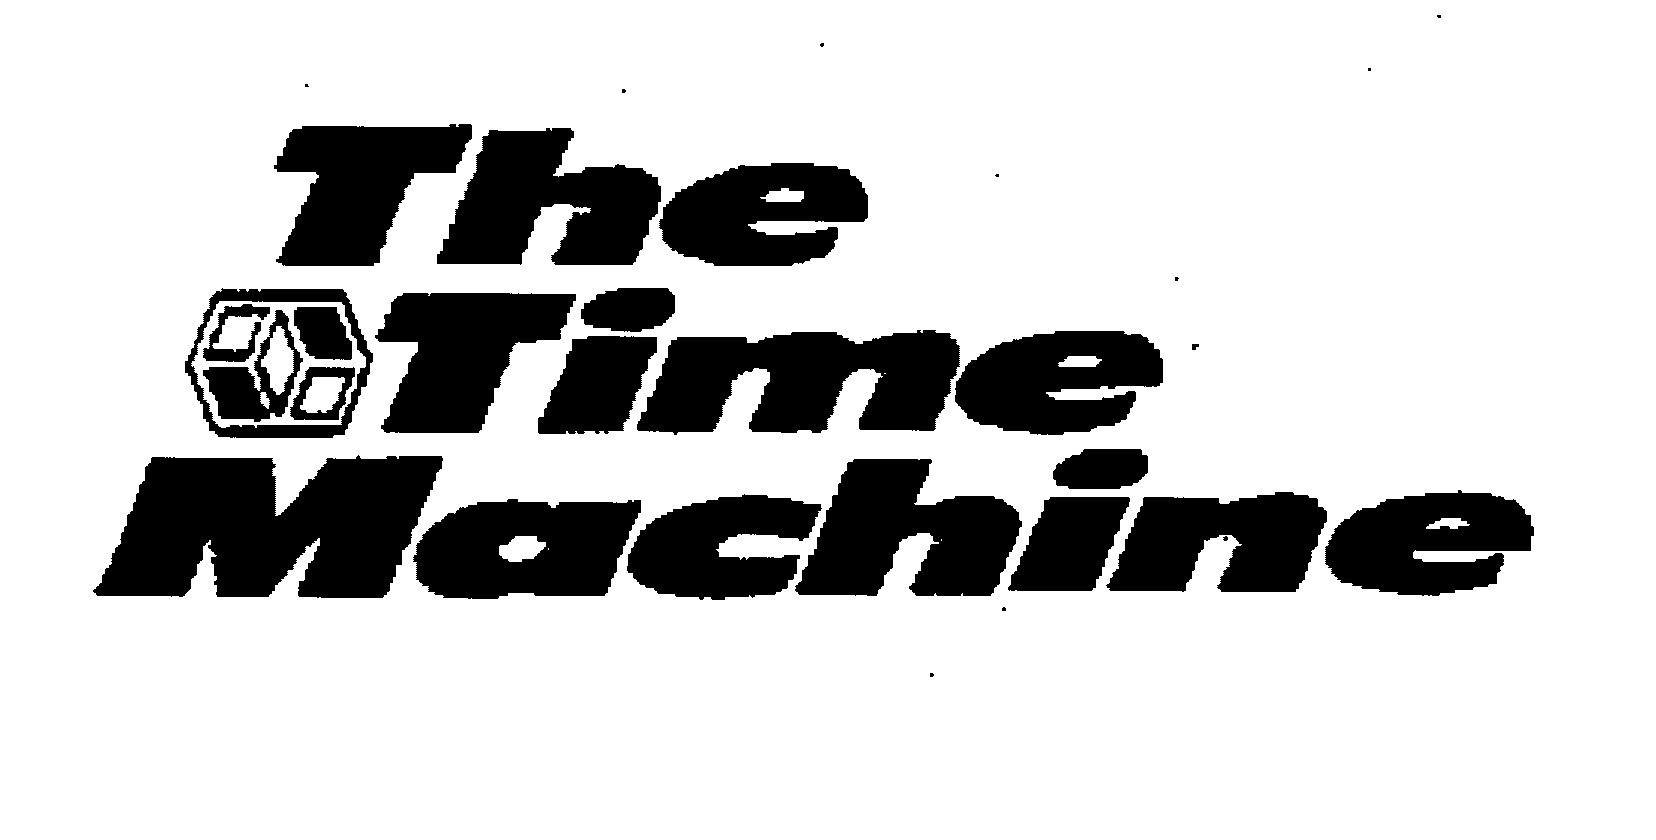 Trademark Logo THE TIME MACHINE